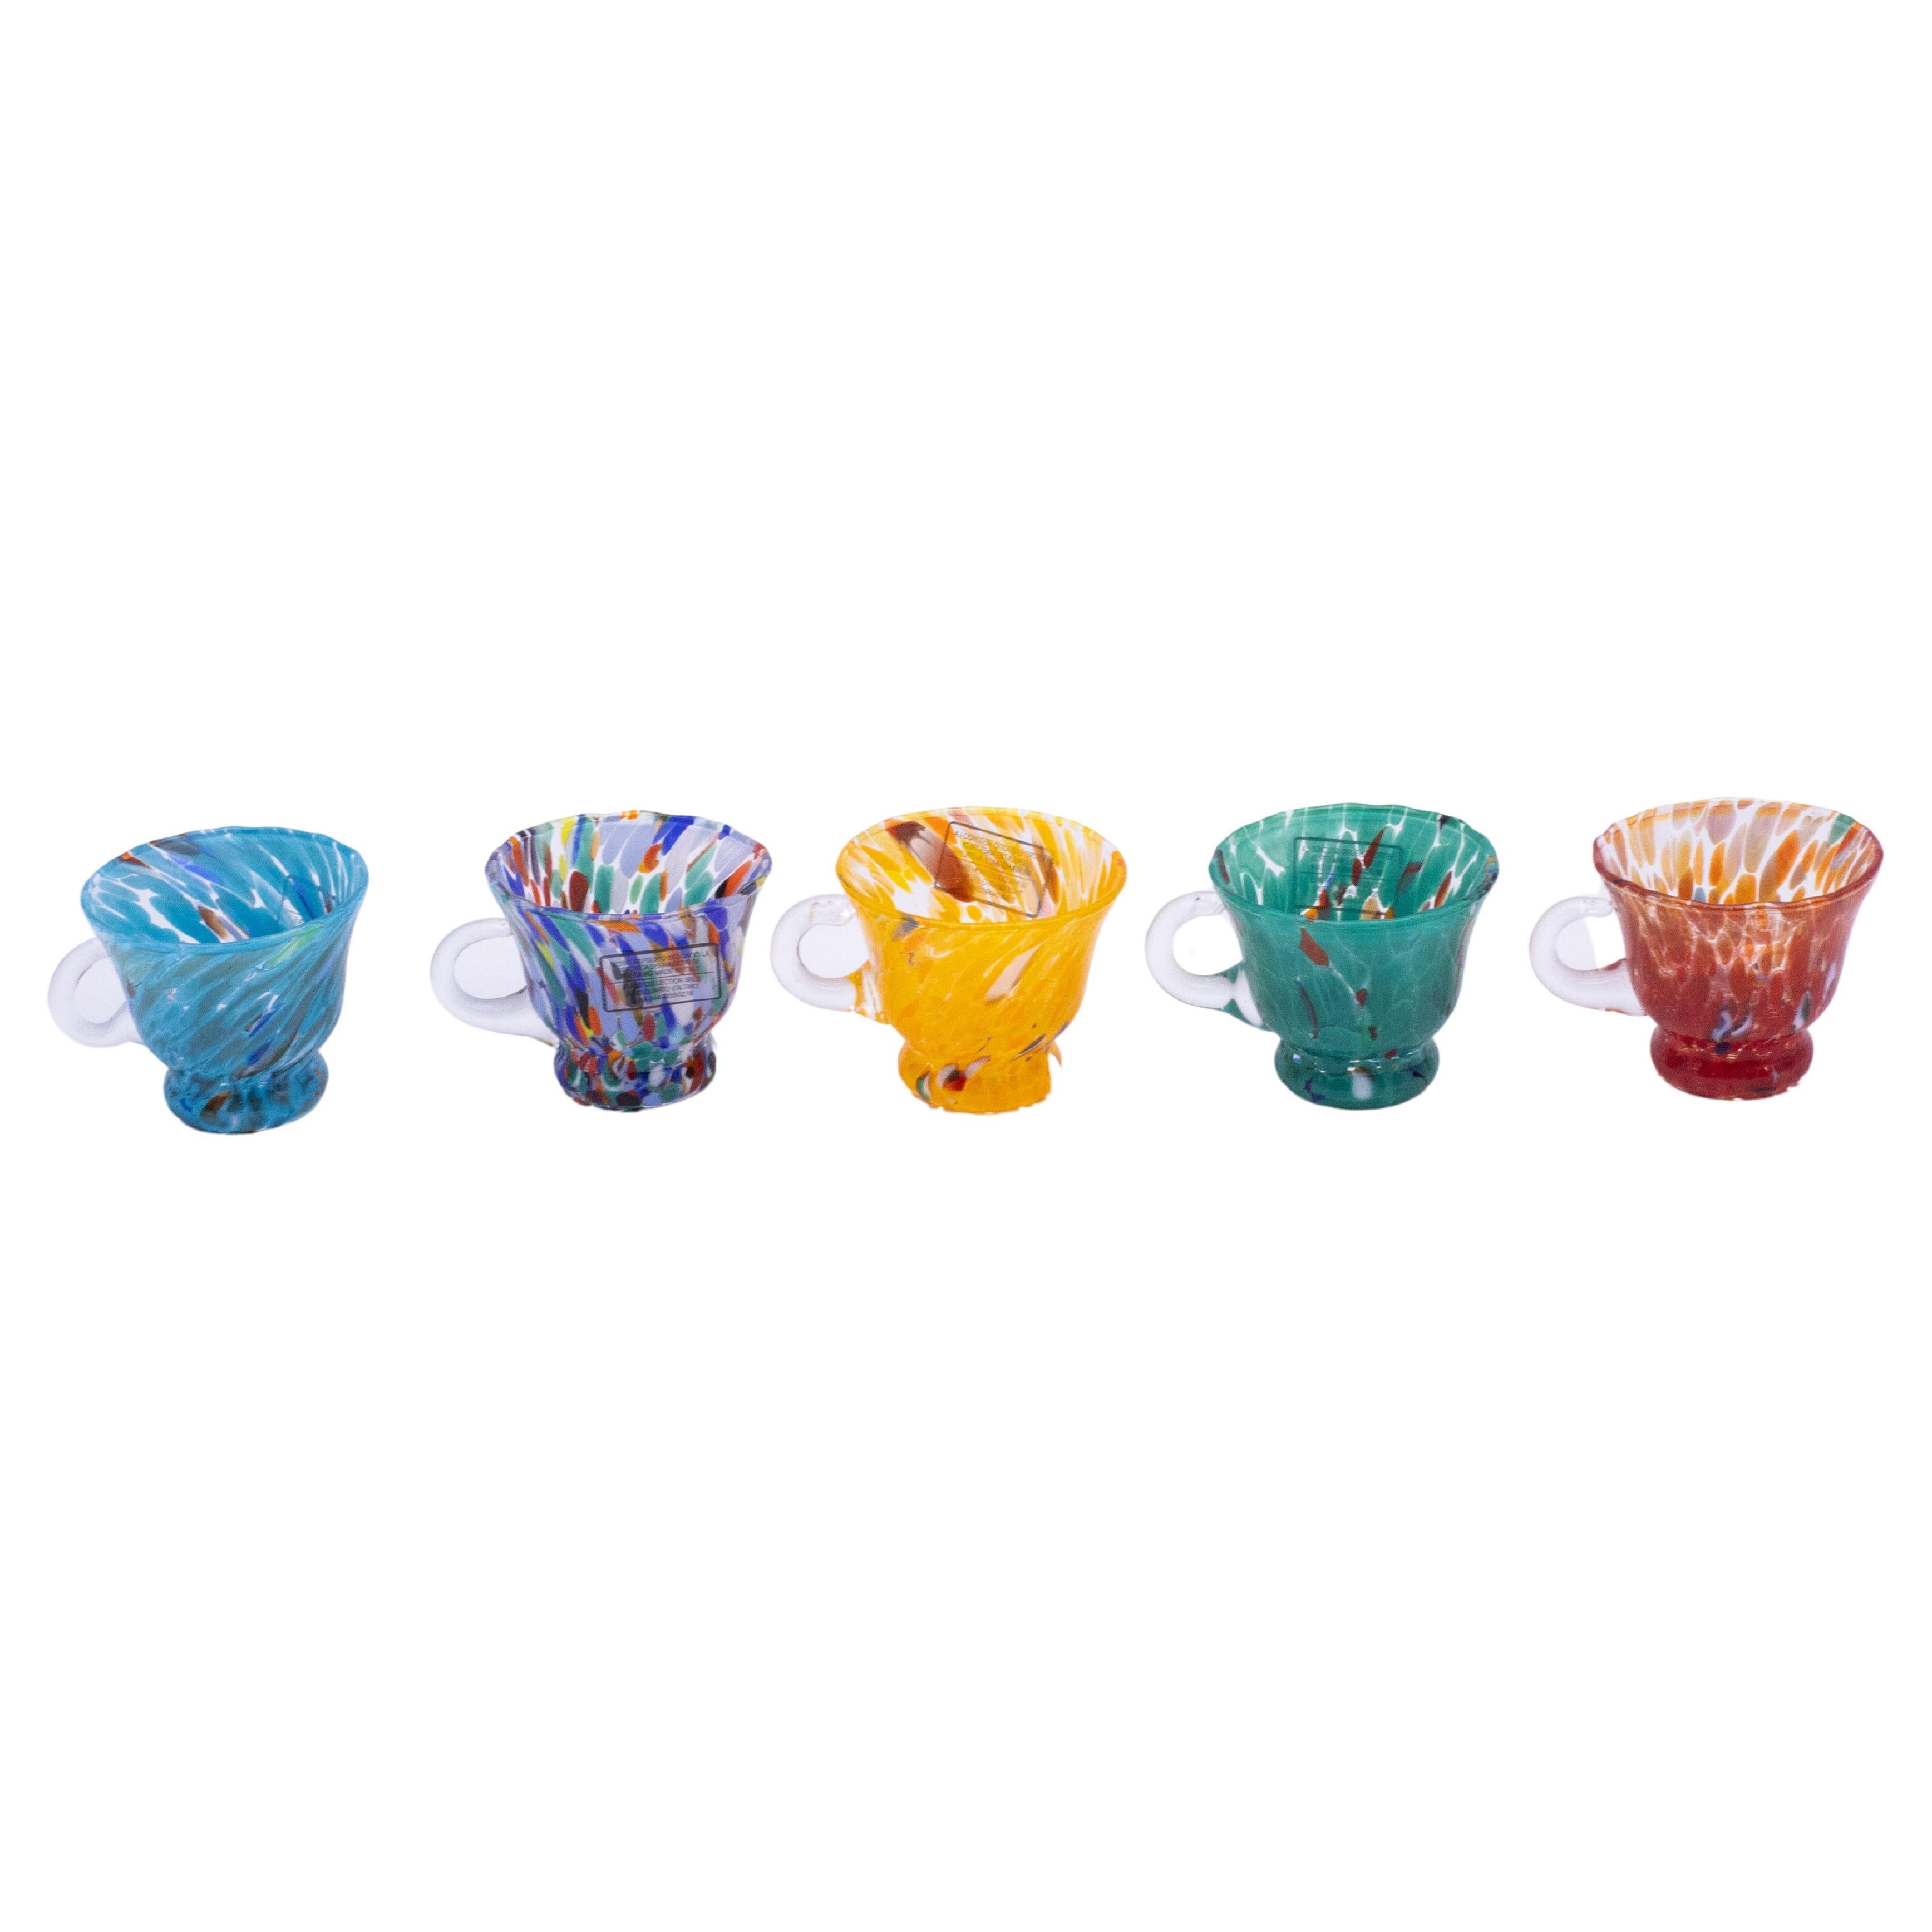 Ensemble de 5 verres de Murano multicolores fabriqués à la main, verre de Murano fabriqué en Italie